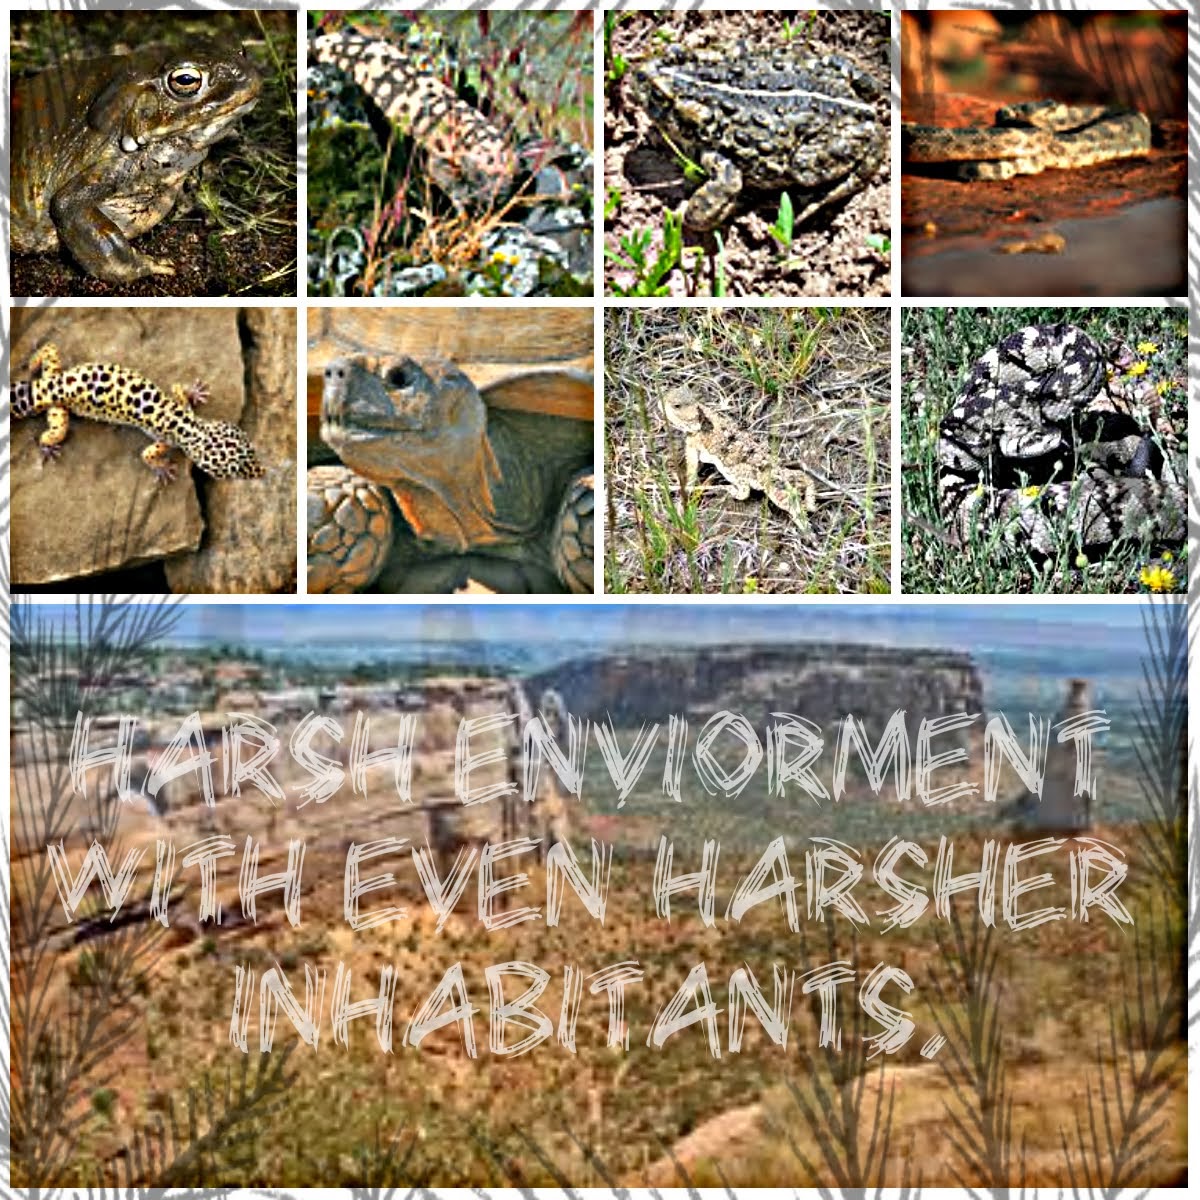 Desert Reptiles and Amphibians